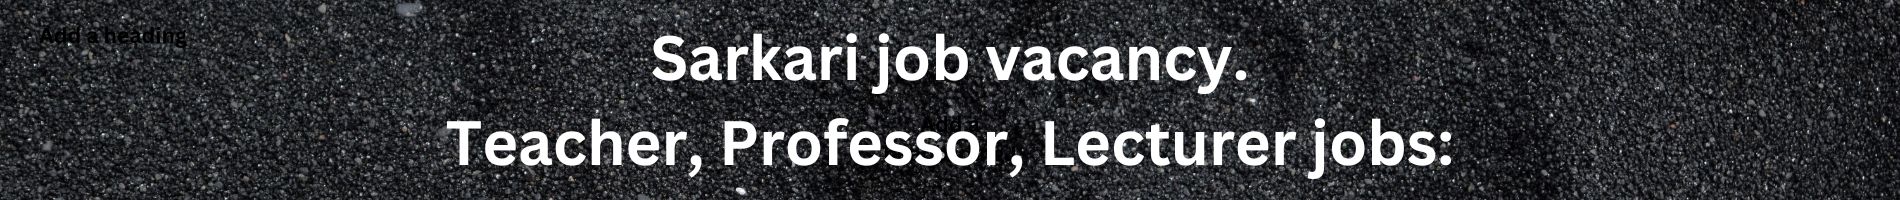 Sarkari job vacancy. Teacher, Professor, Lecturer jobs: